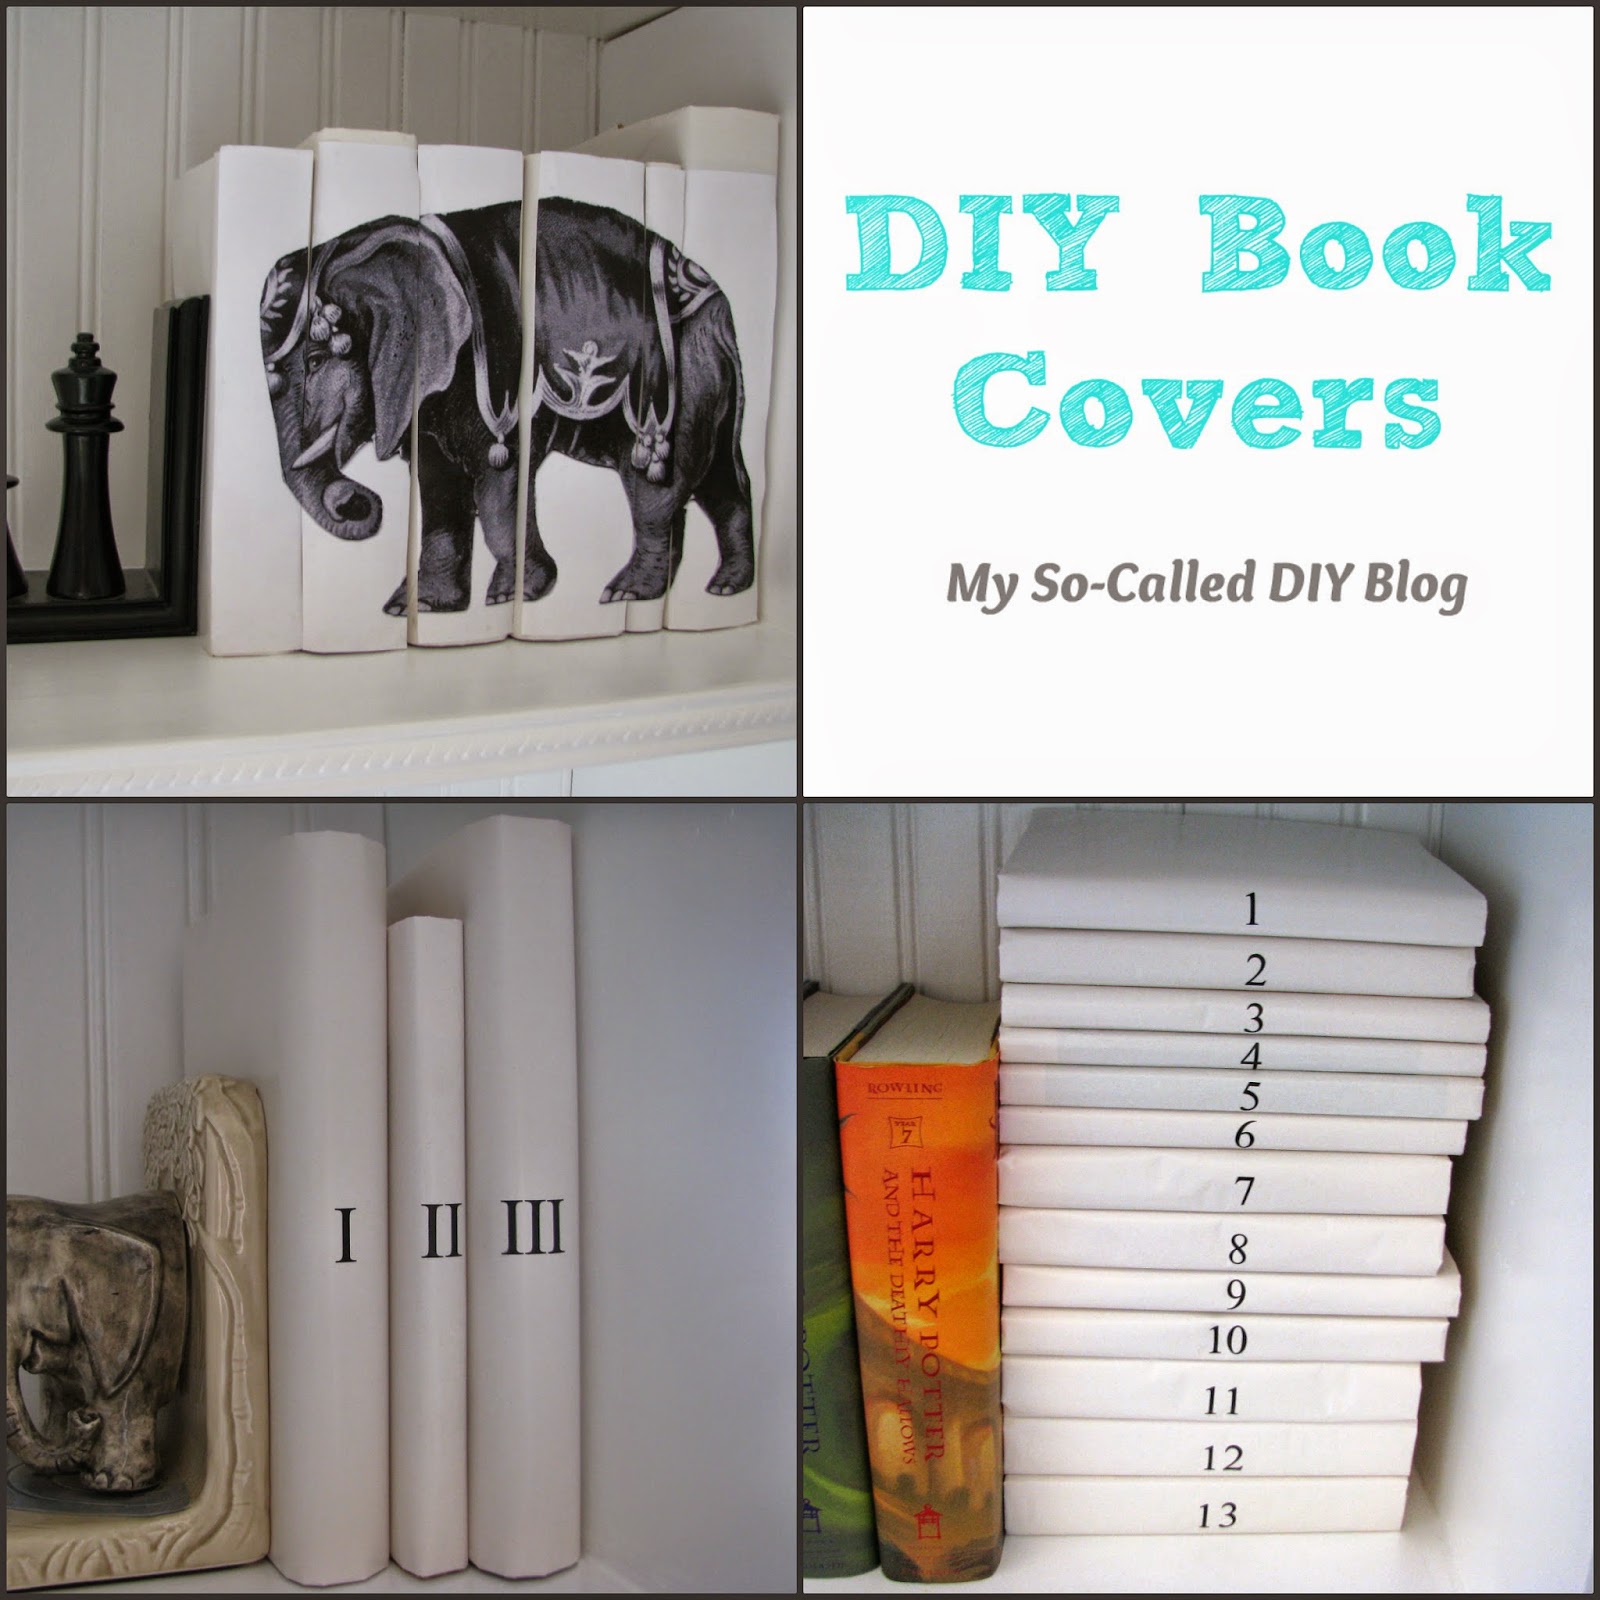 http://www.mysocalleddiyblog.com/2015/03/diy-book-covers.html